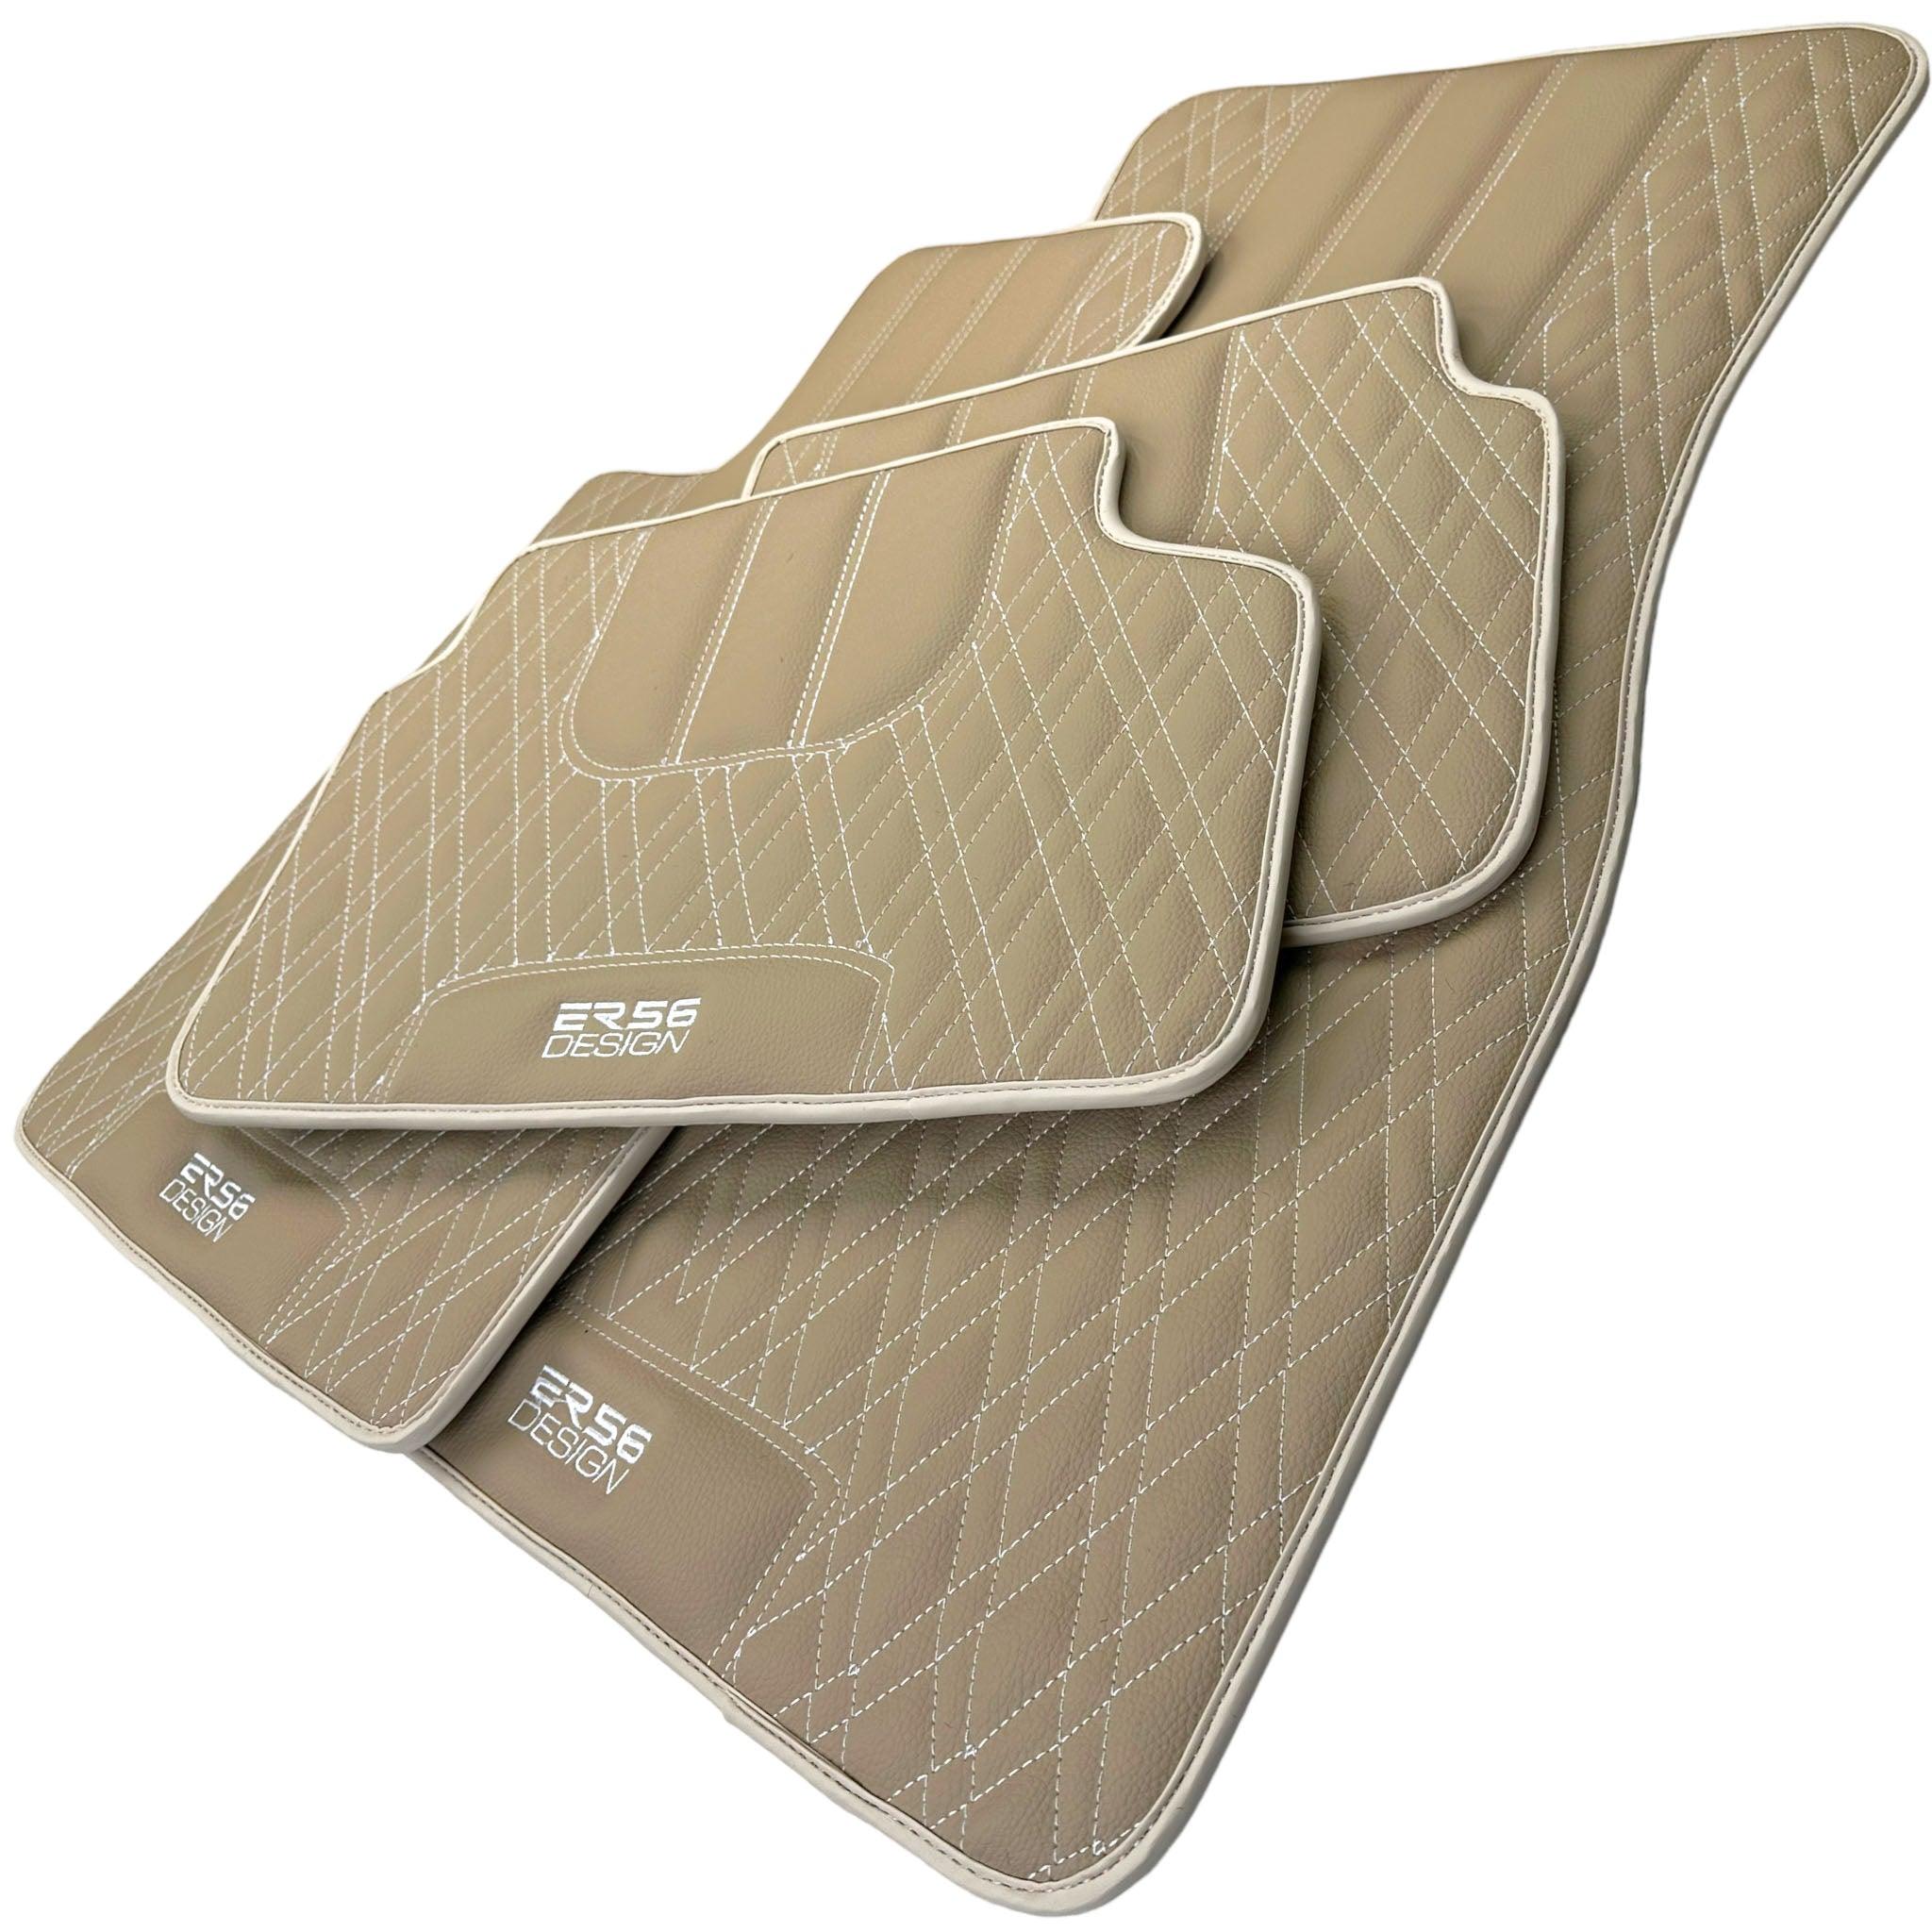 Beige Leather Floor Floor Mats For BMW 7 Series F01 | Fighter Jet Edition AutoWin Brand |Sky Blue Trim